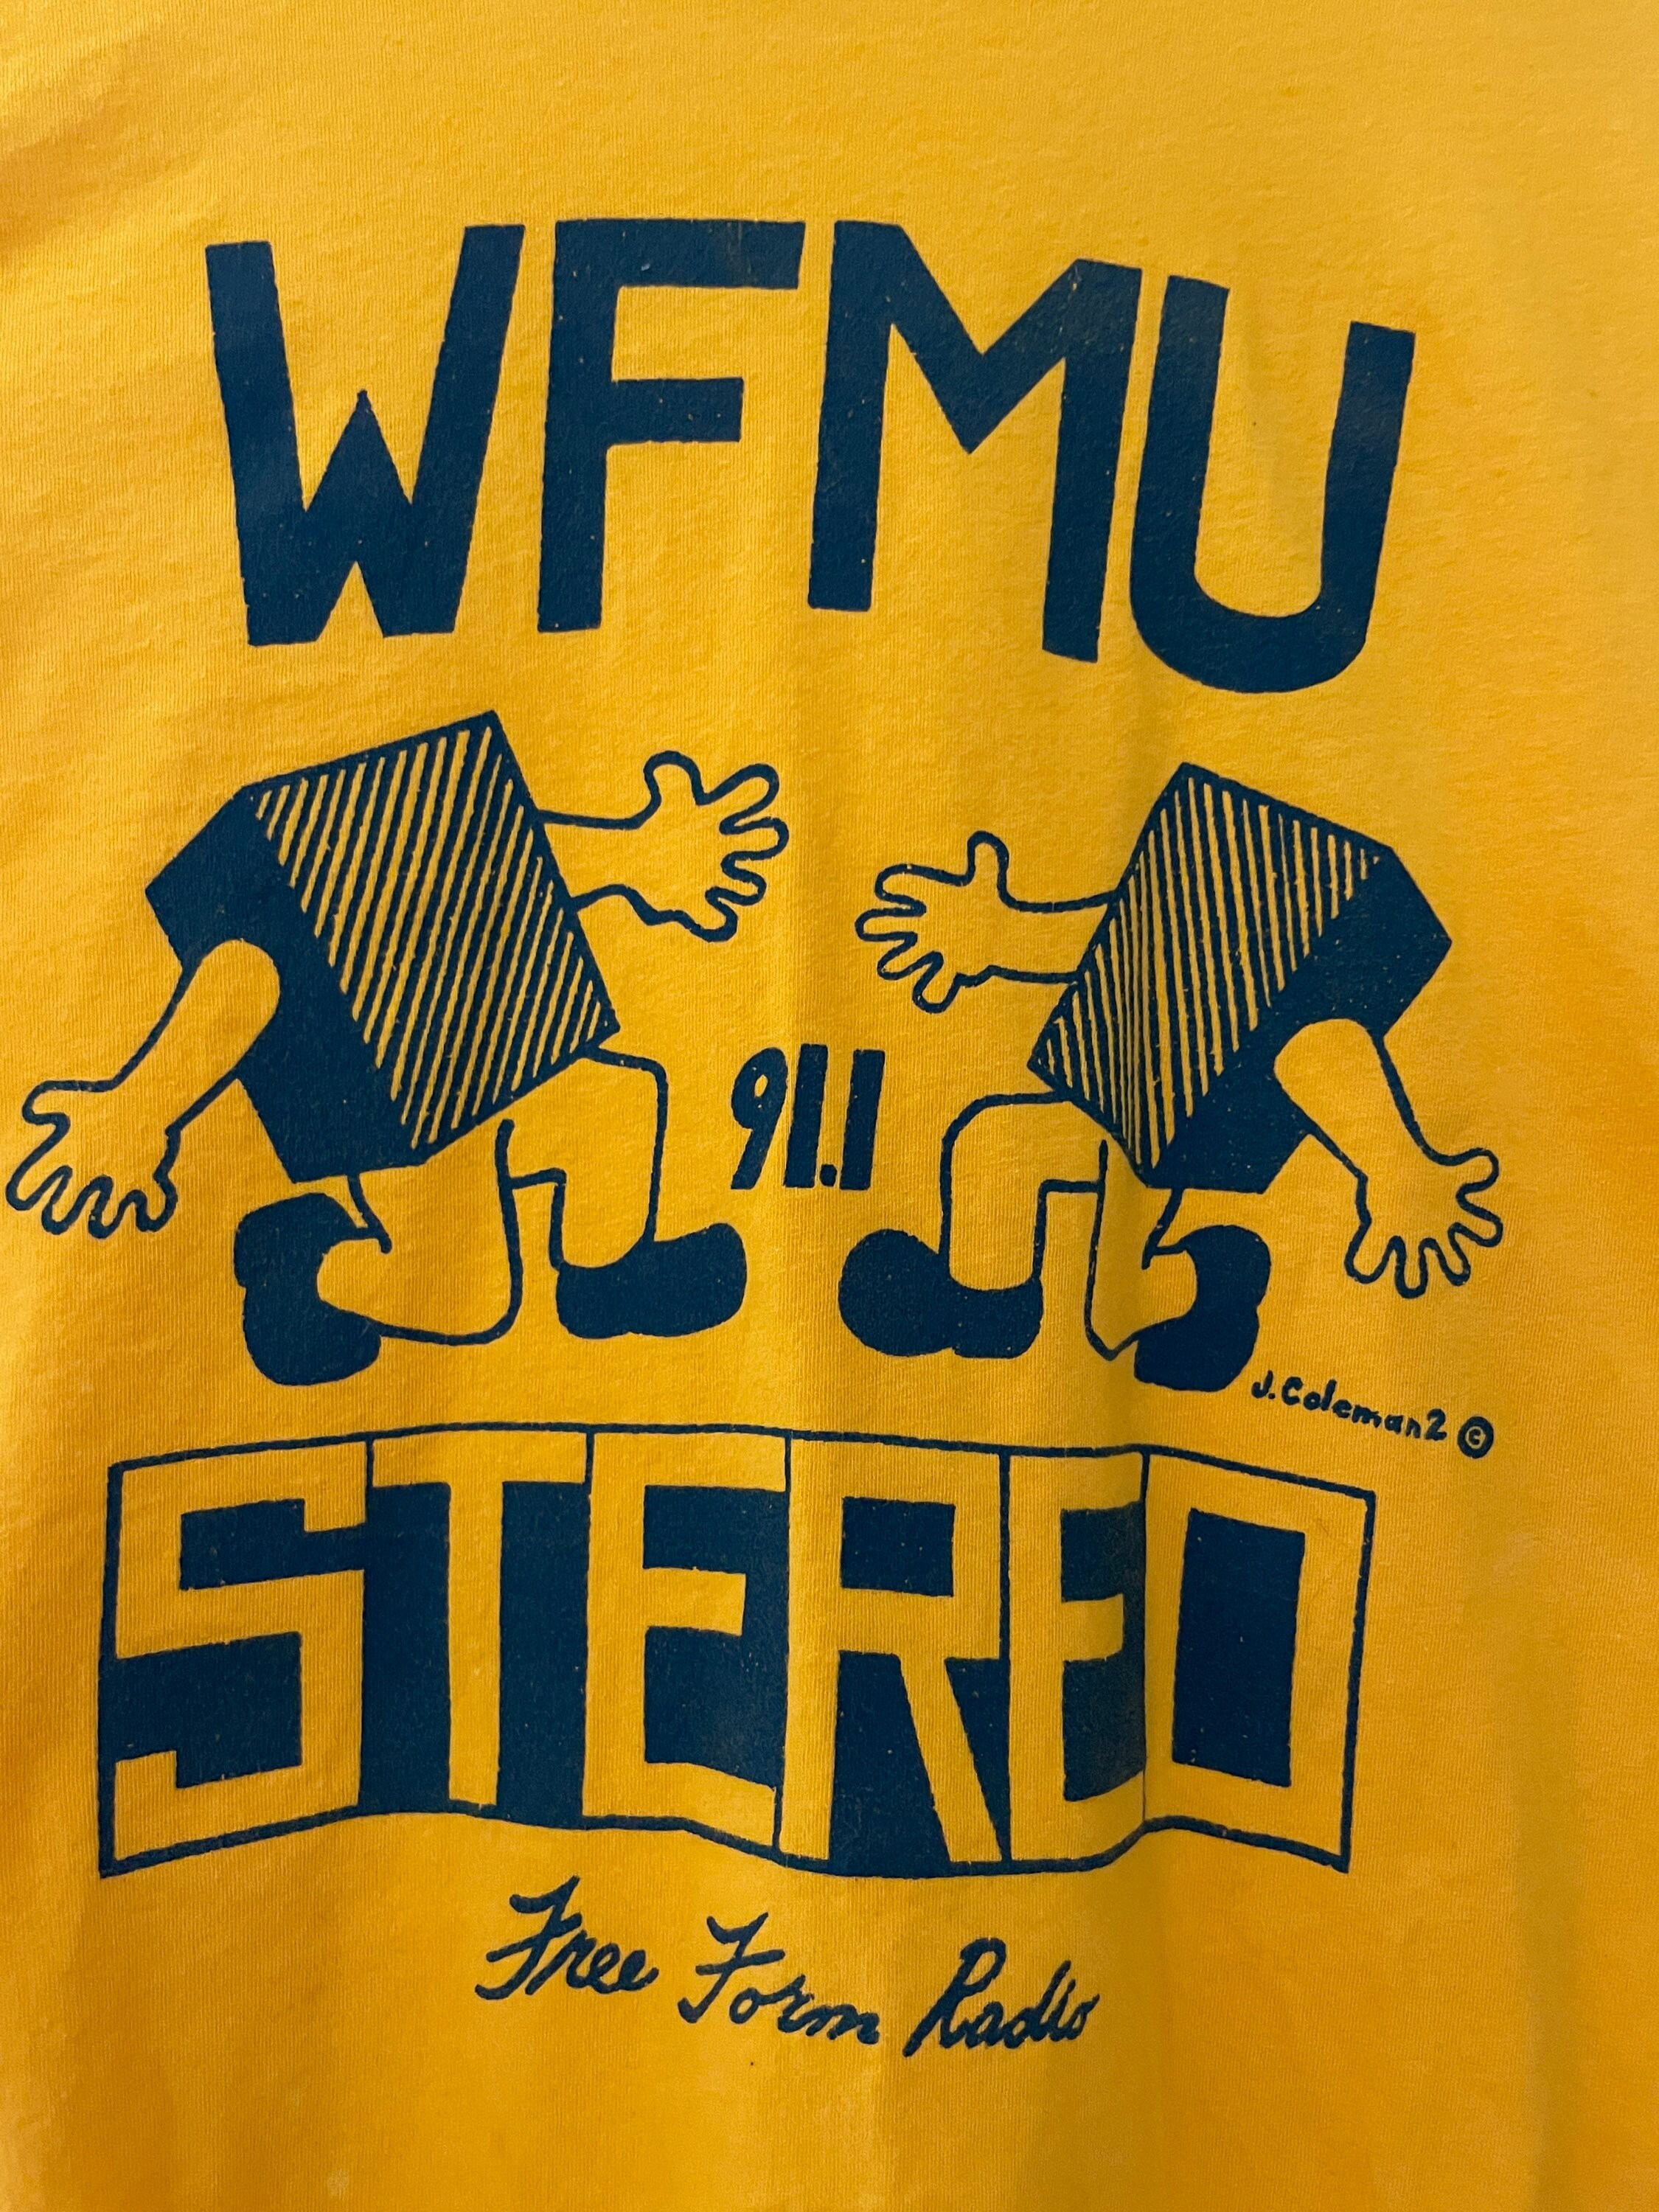 WFMU Stereo T Shirt 91.9 New York Jersey City Historic 